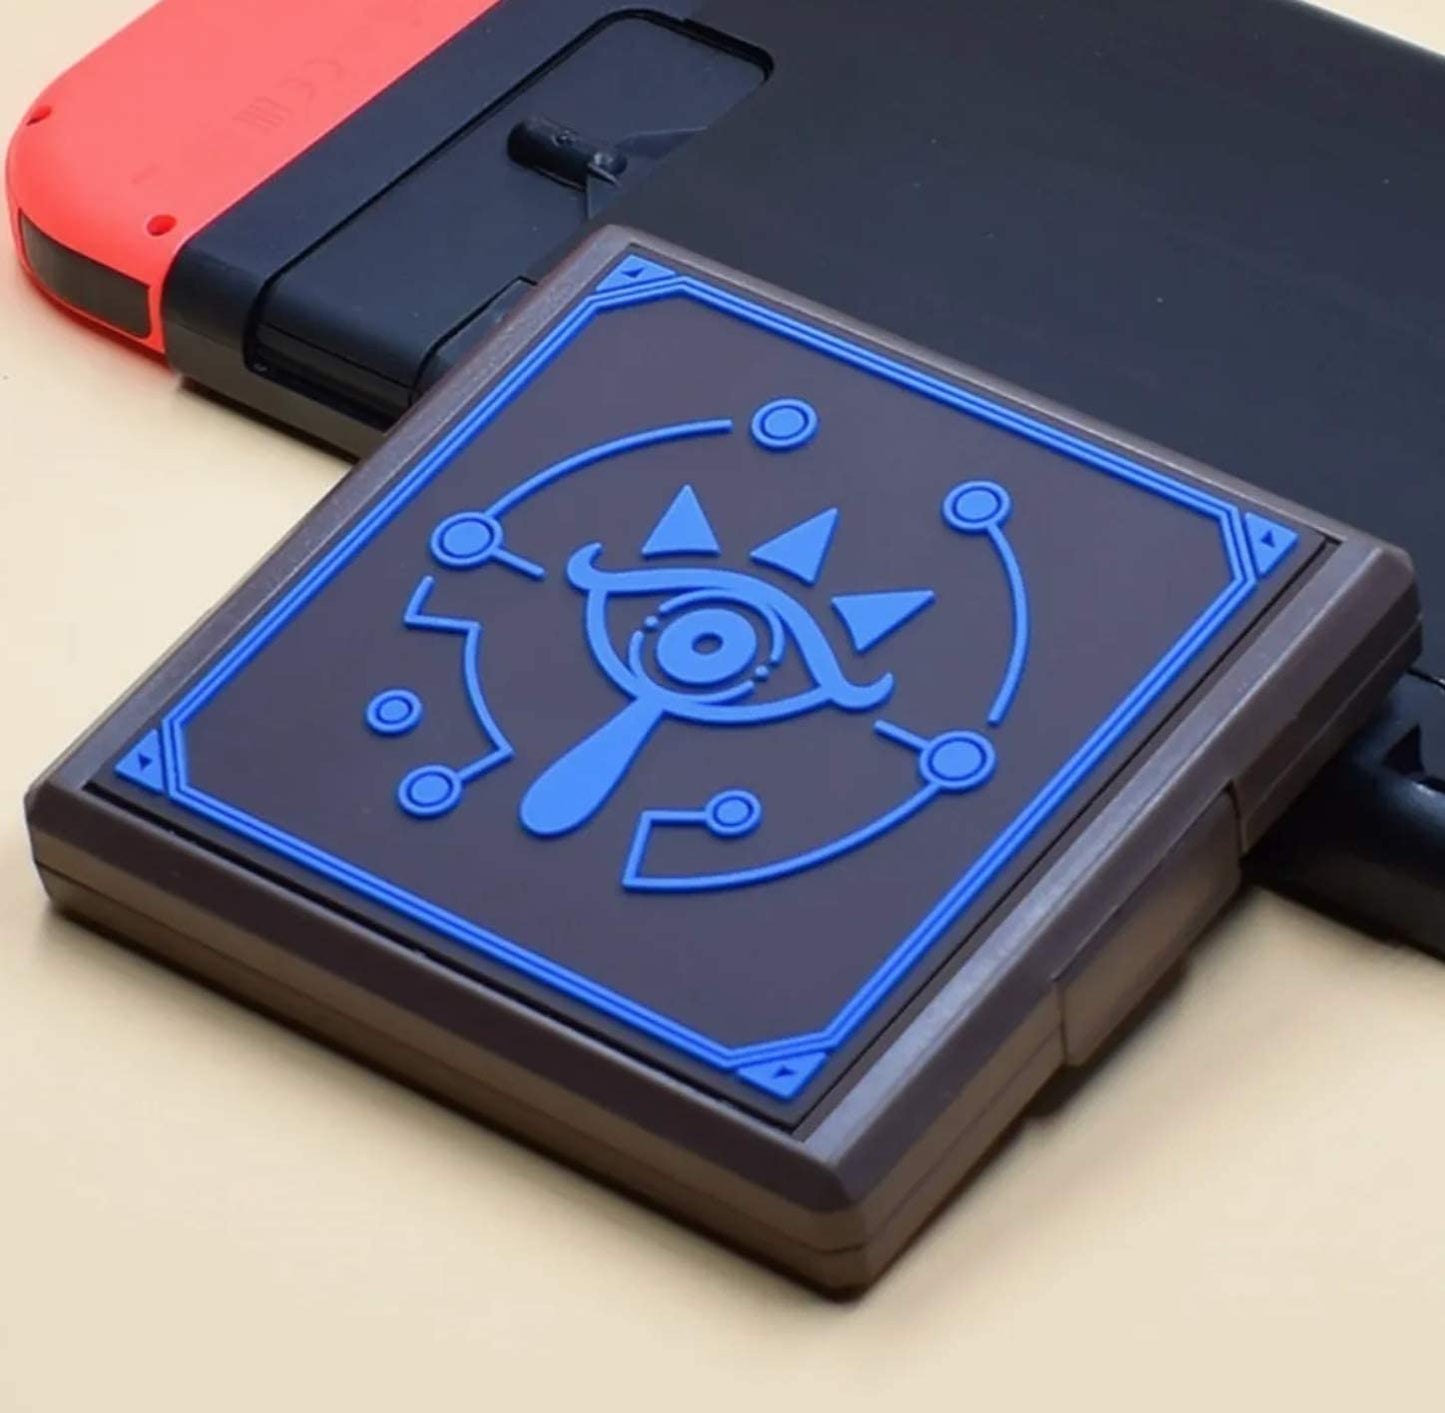 Estuche Nintendo Switch - Zelda Case Kit Accesorios Premium - TiendaGeek.com